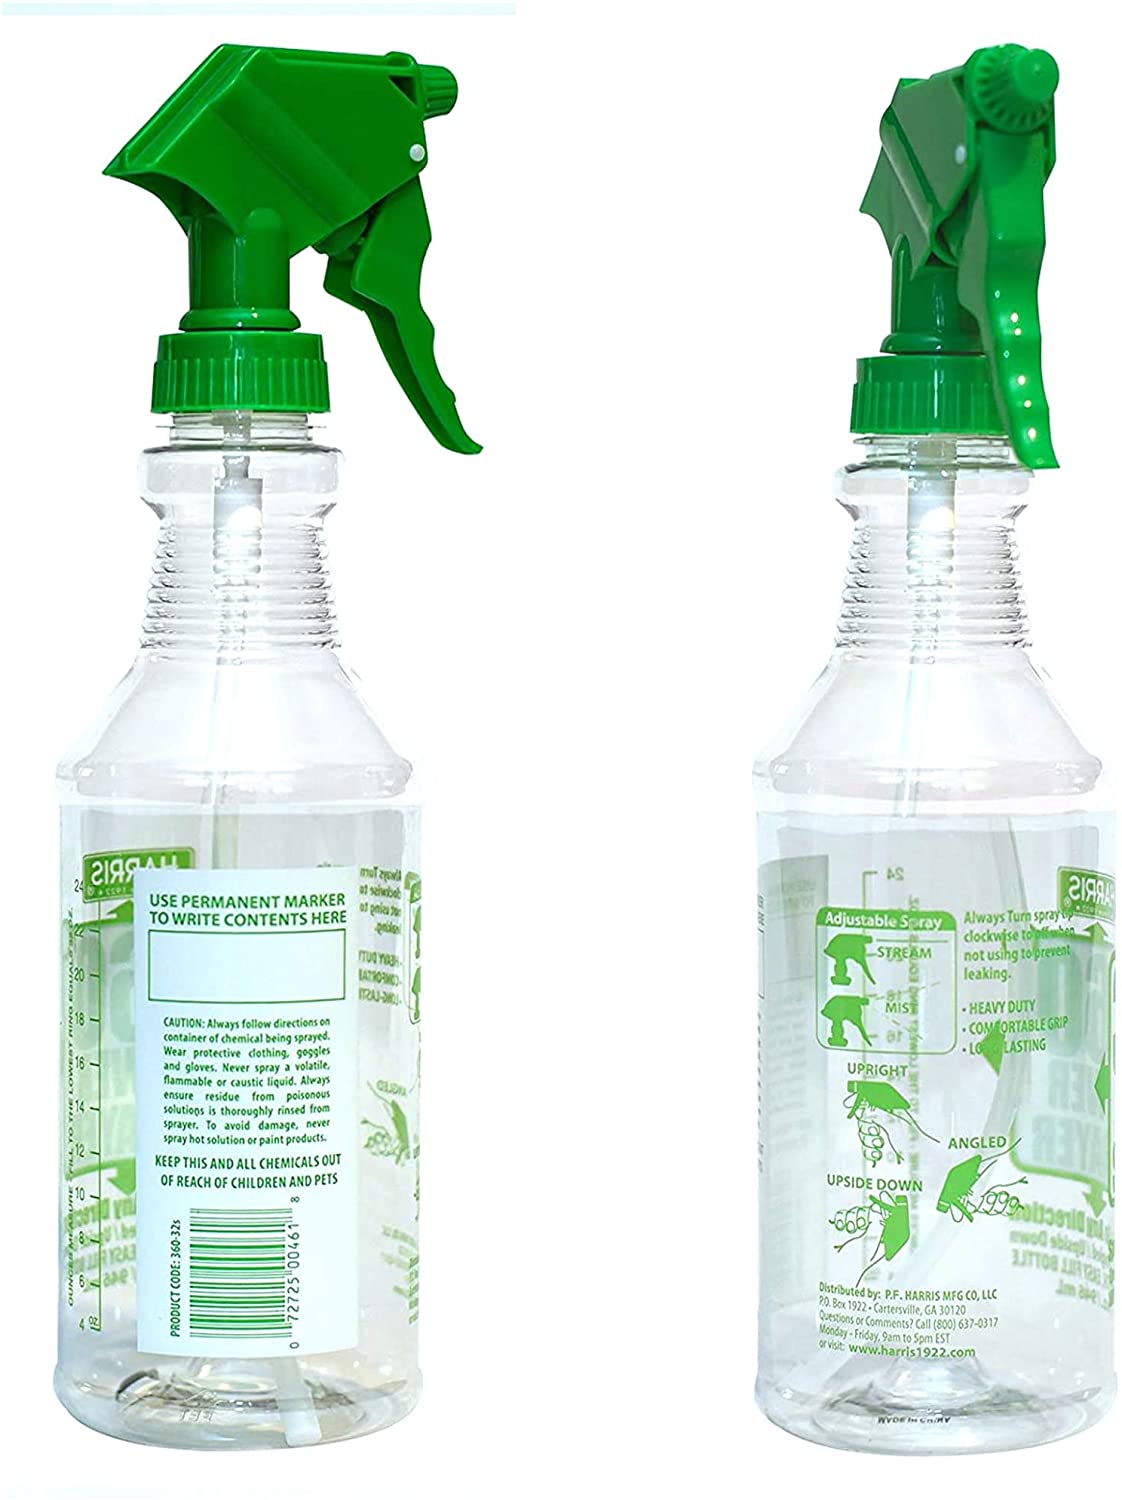 Harris 32 oz. Heavy-Duty Chemical Resistant Pro Spray Bottle (10-Pack)